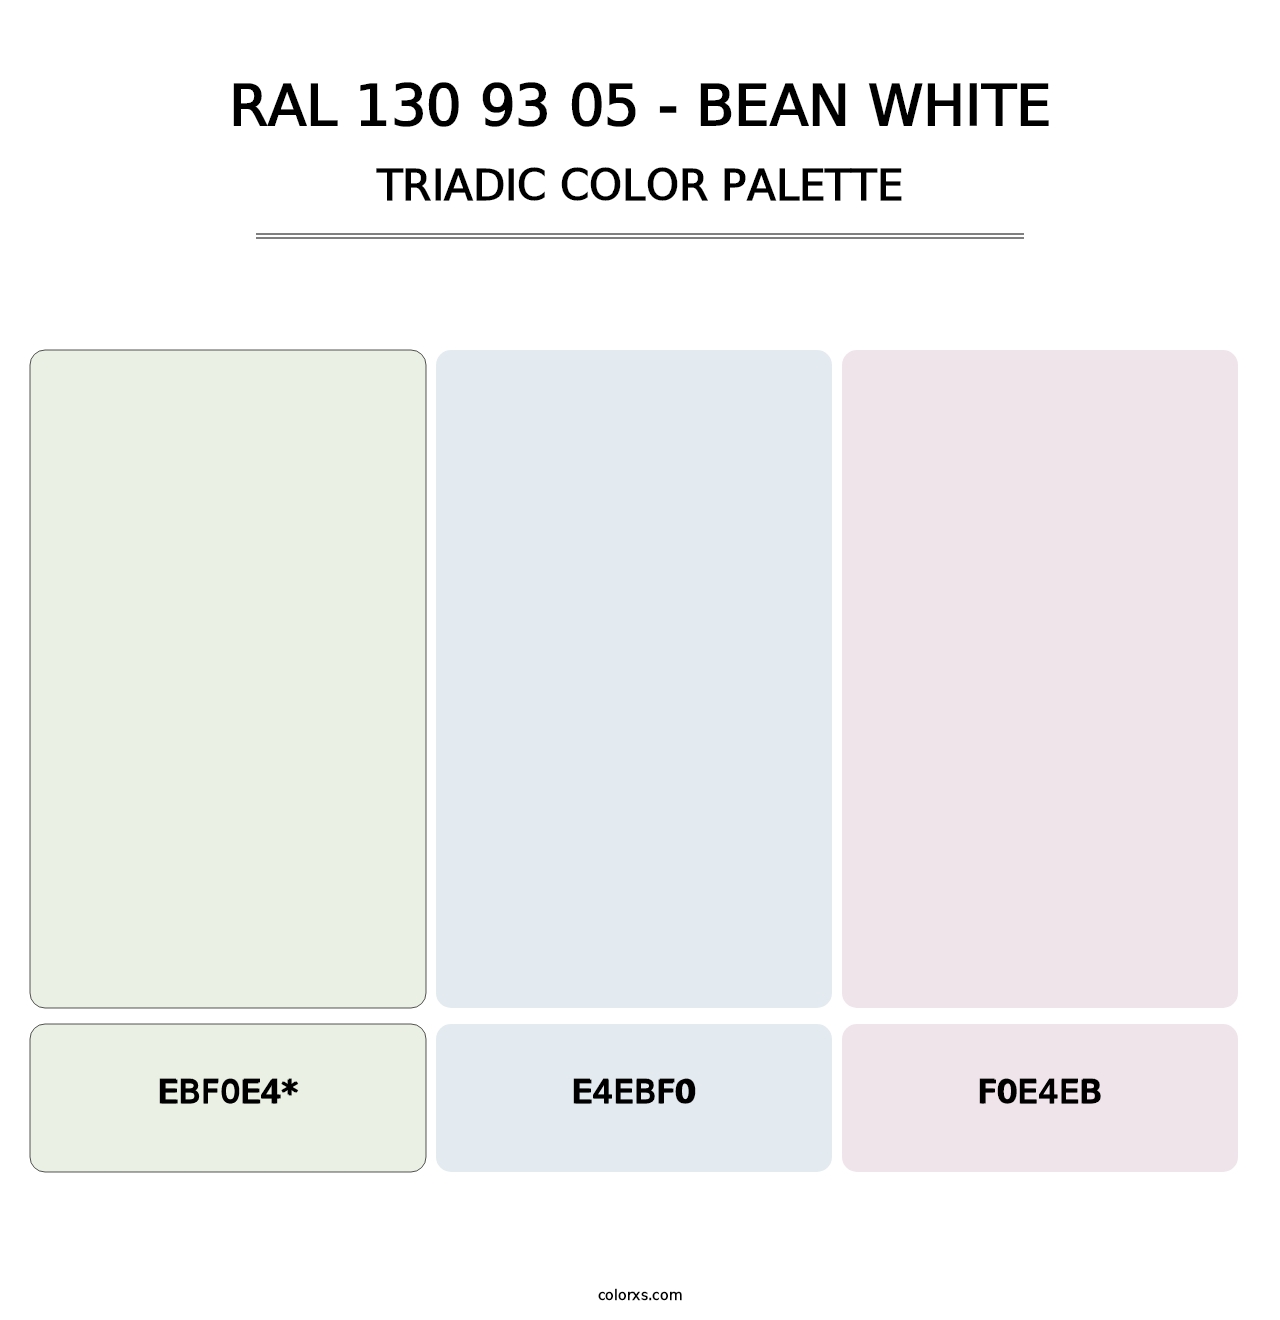 RAL 130 93 05 - Bean White - Triadic Color Palette